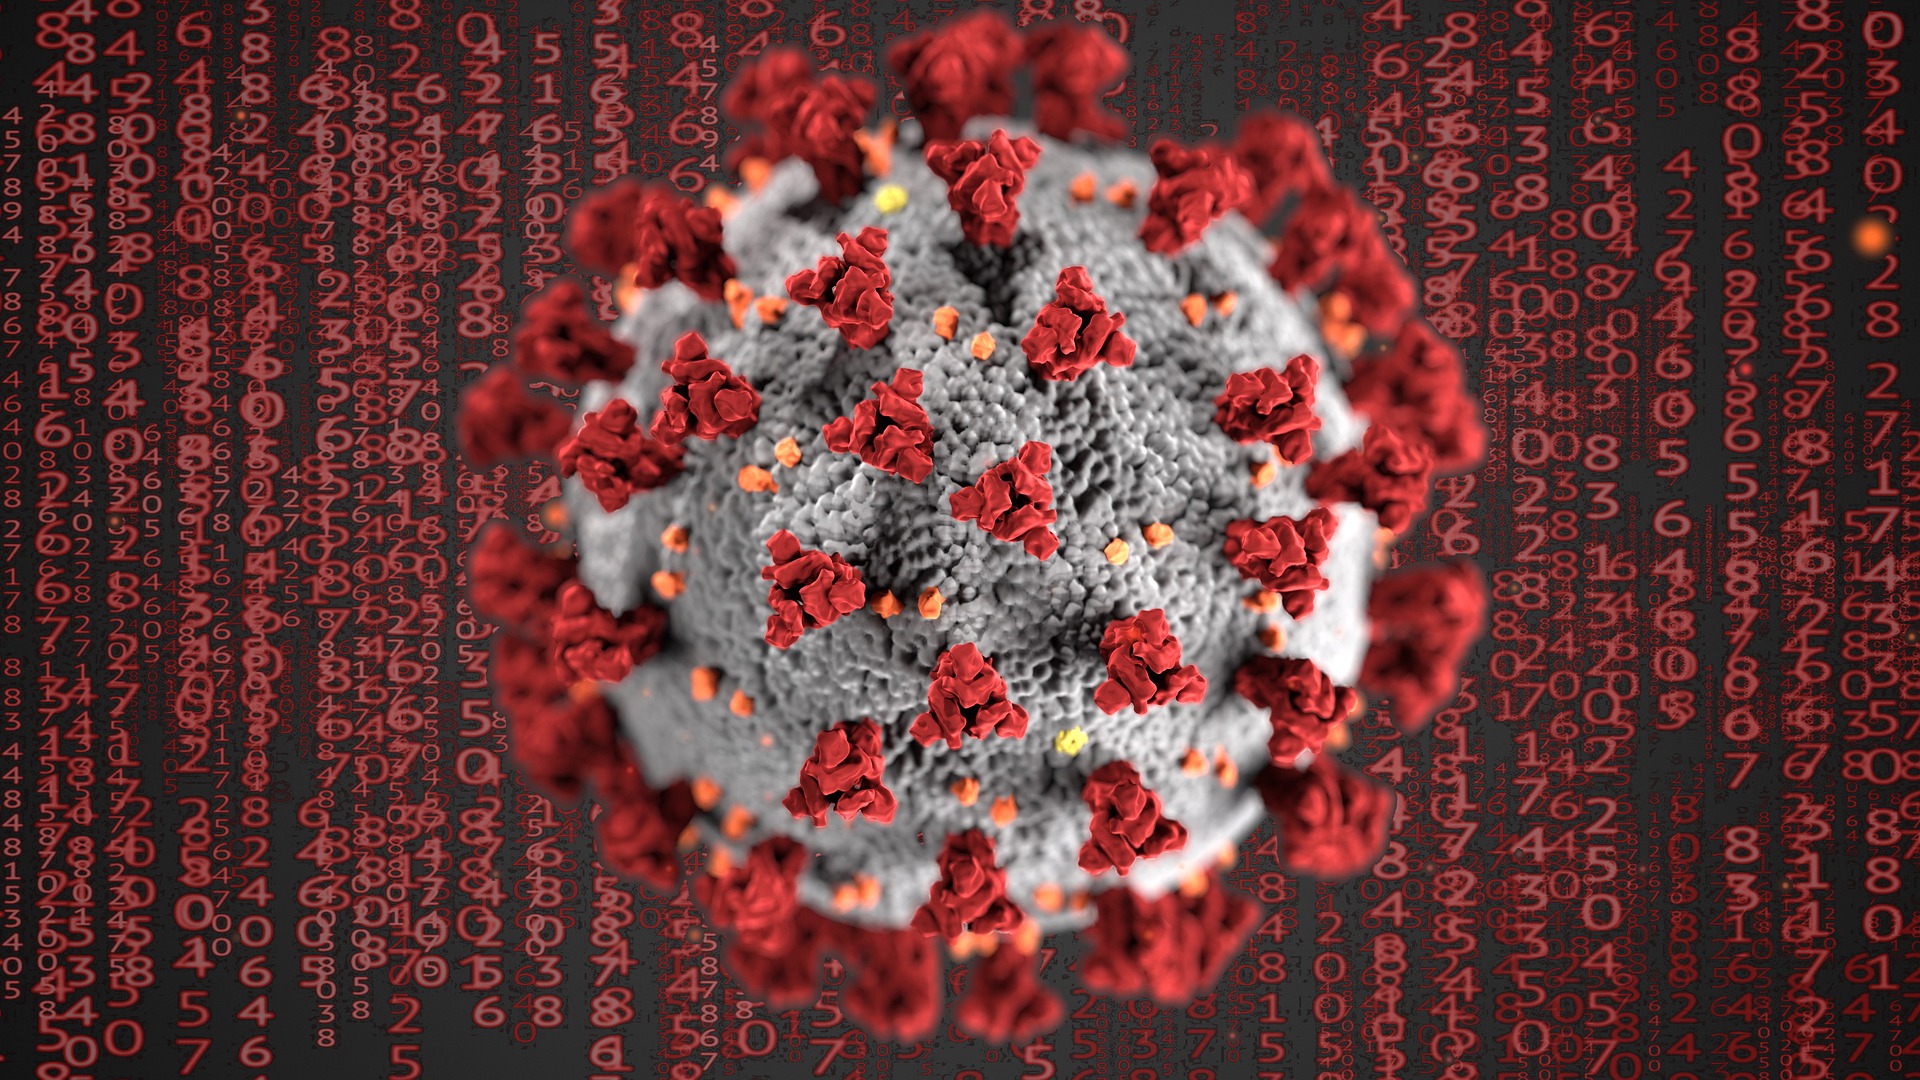 Coronasmitte, corona virus